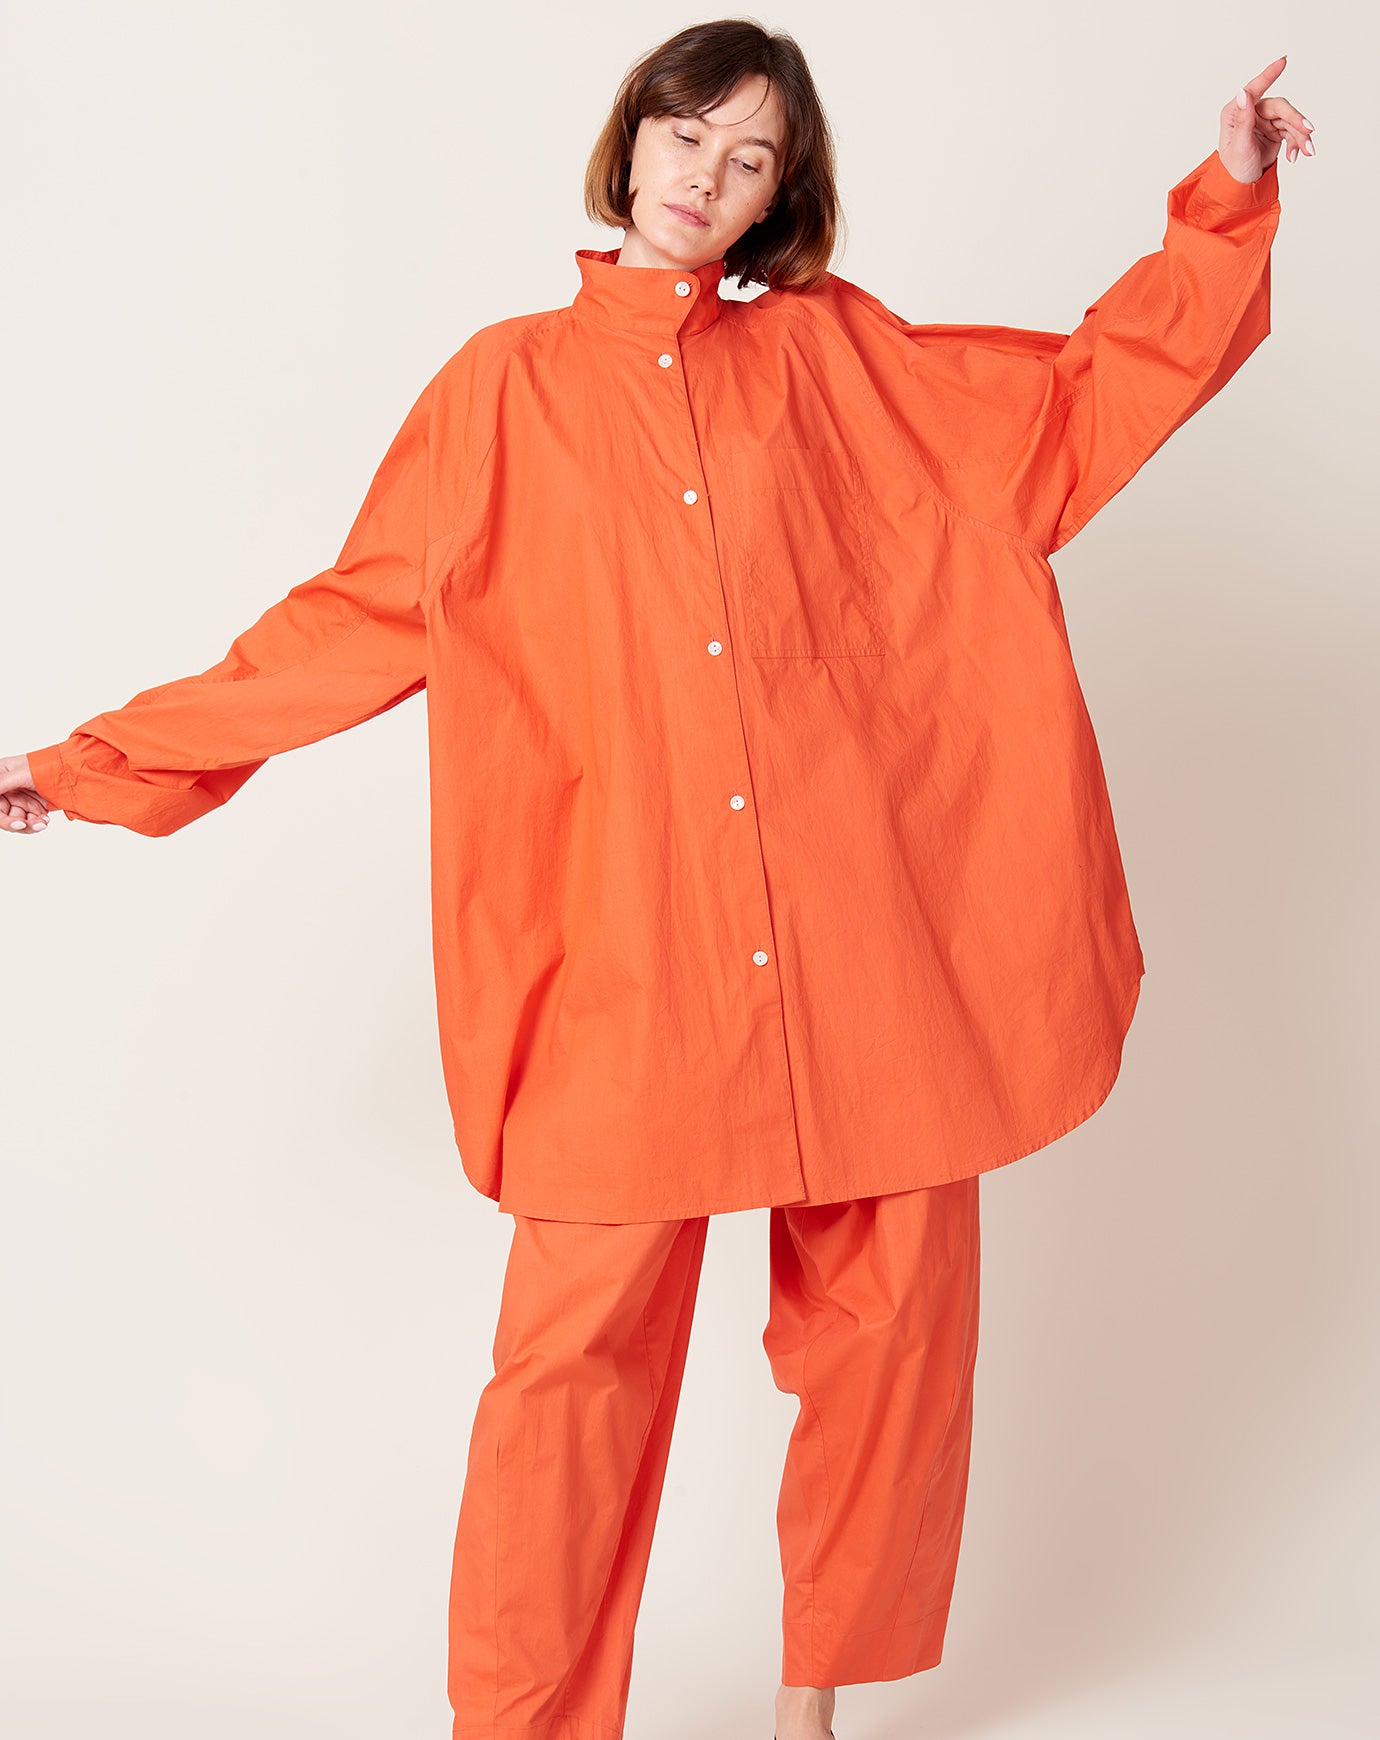 Anaak Joan Oversized Tunic in Rouge Orange